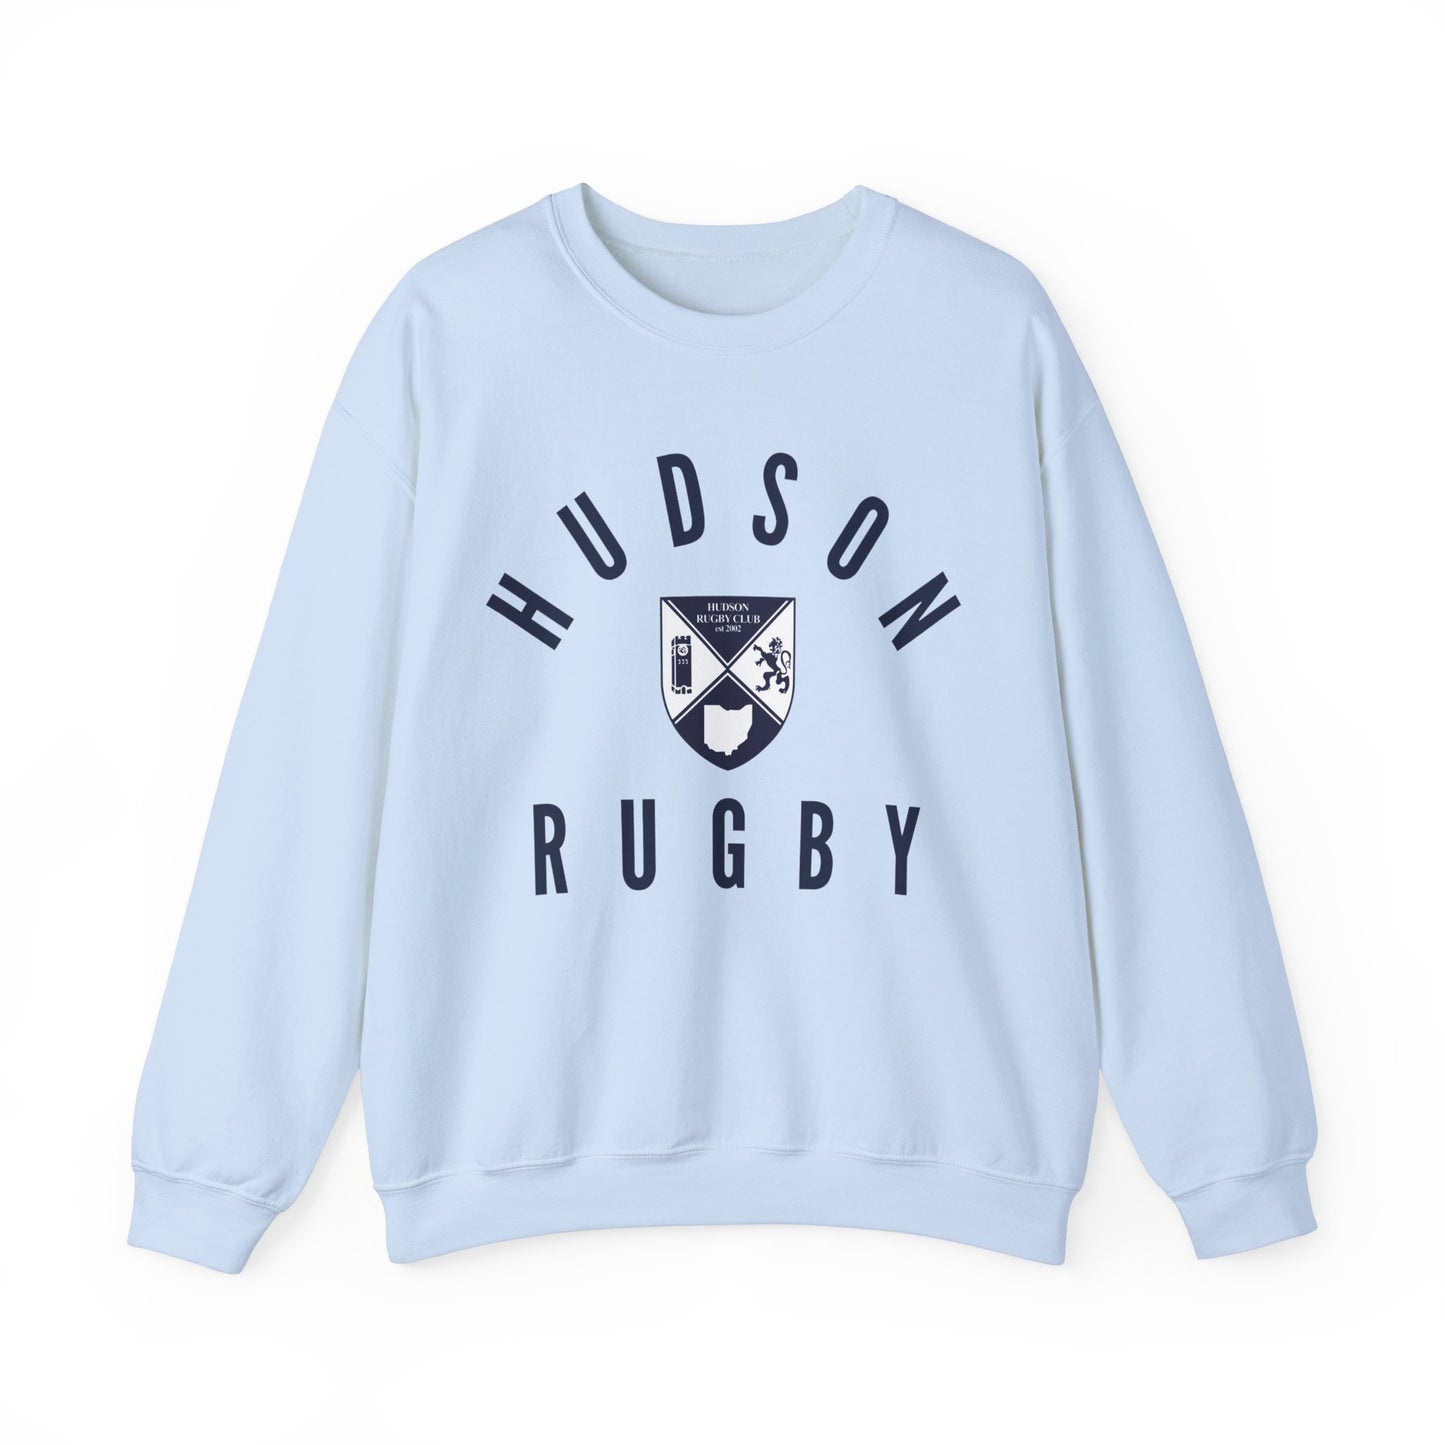 Hudson Rugby Club Crewneck Sweatshirt (Additional Colors)